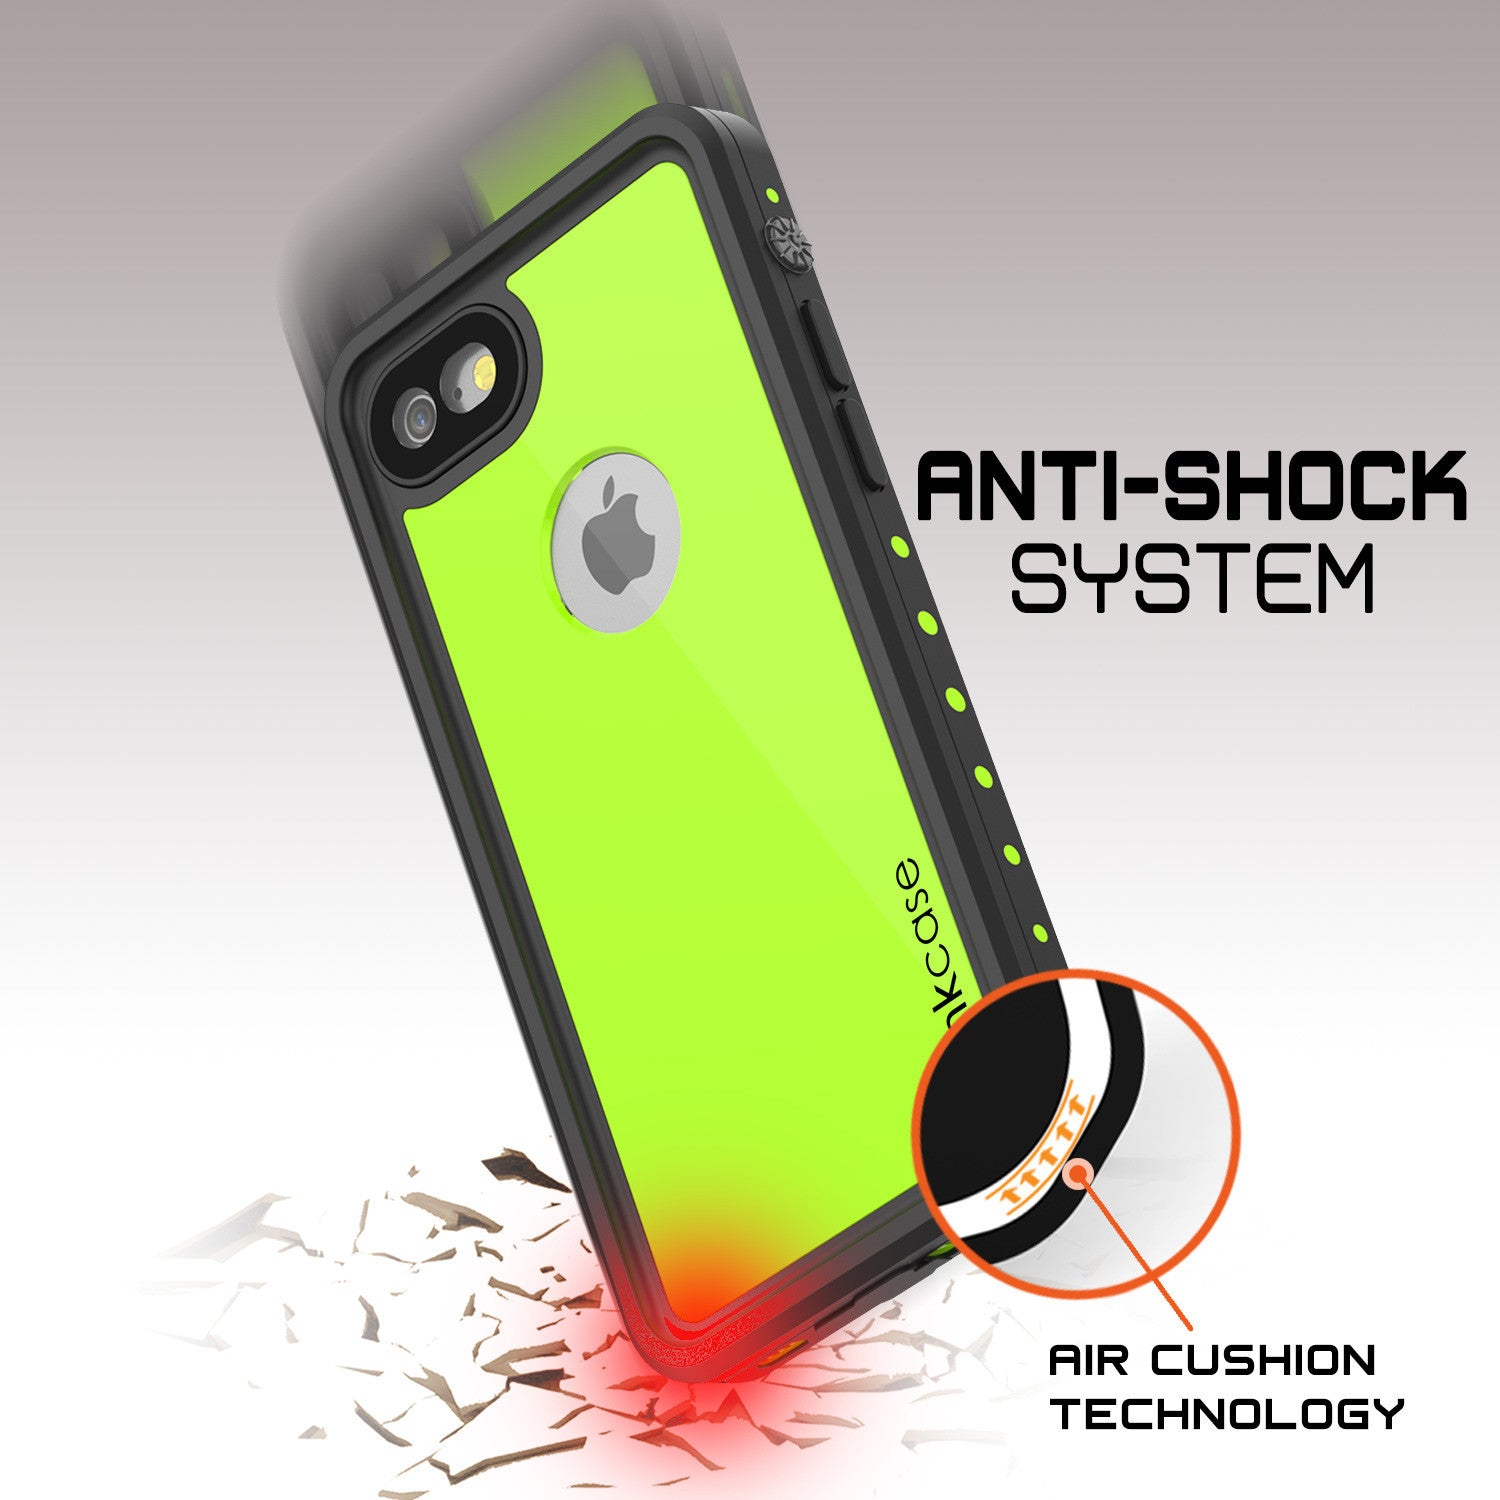 PUNKCASE - Studstar Series Snowproof Case for Apple IPhone 7 | Light Green